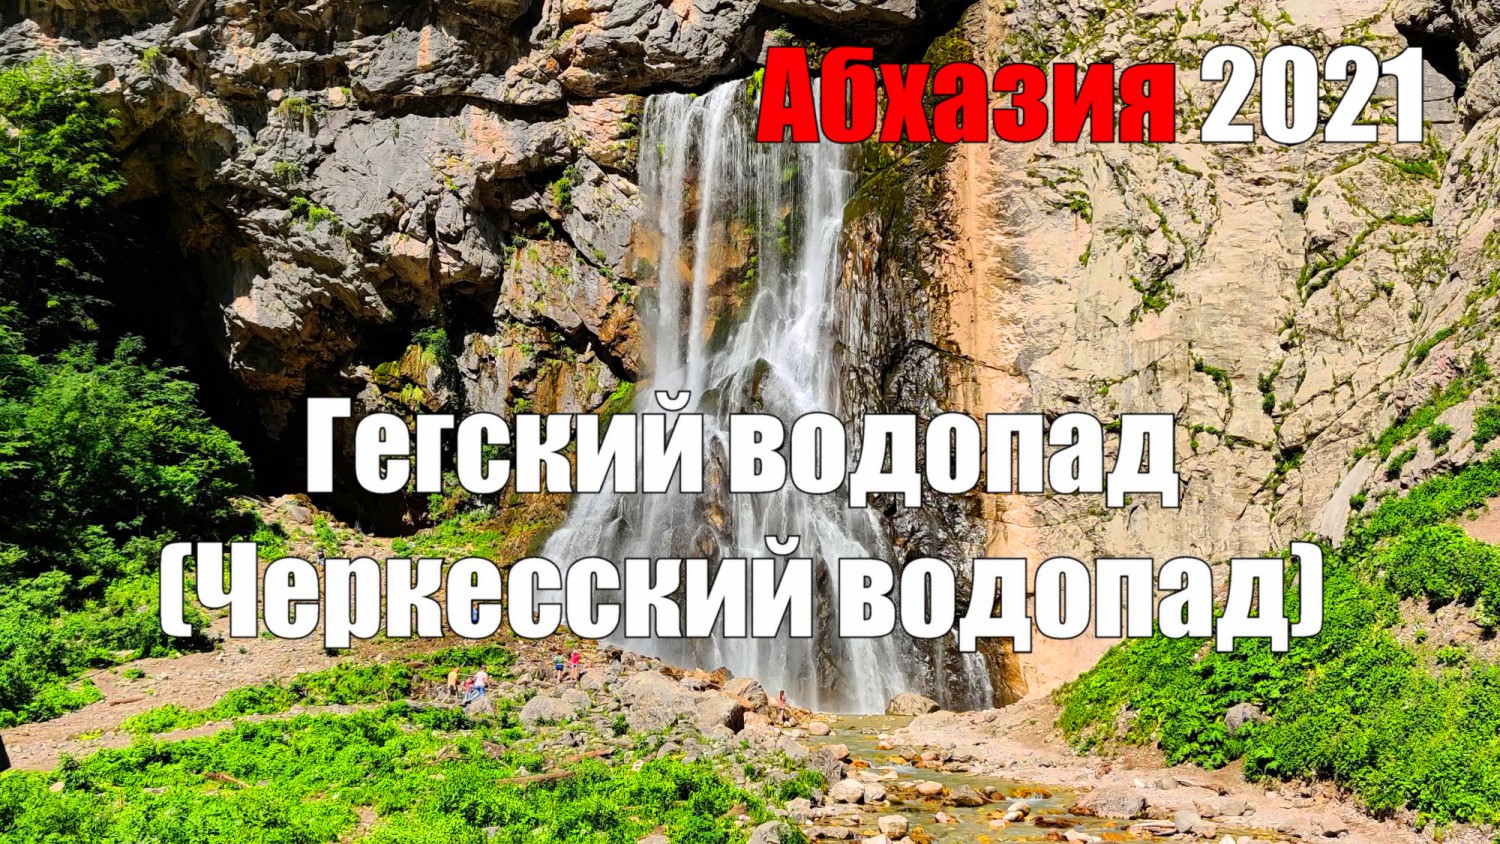 Гегский водопад. Абхазия 2021